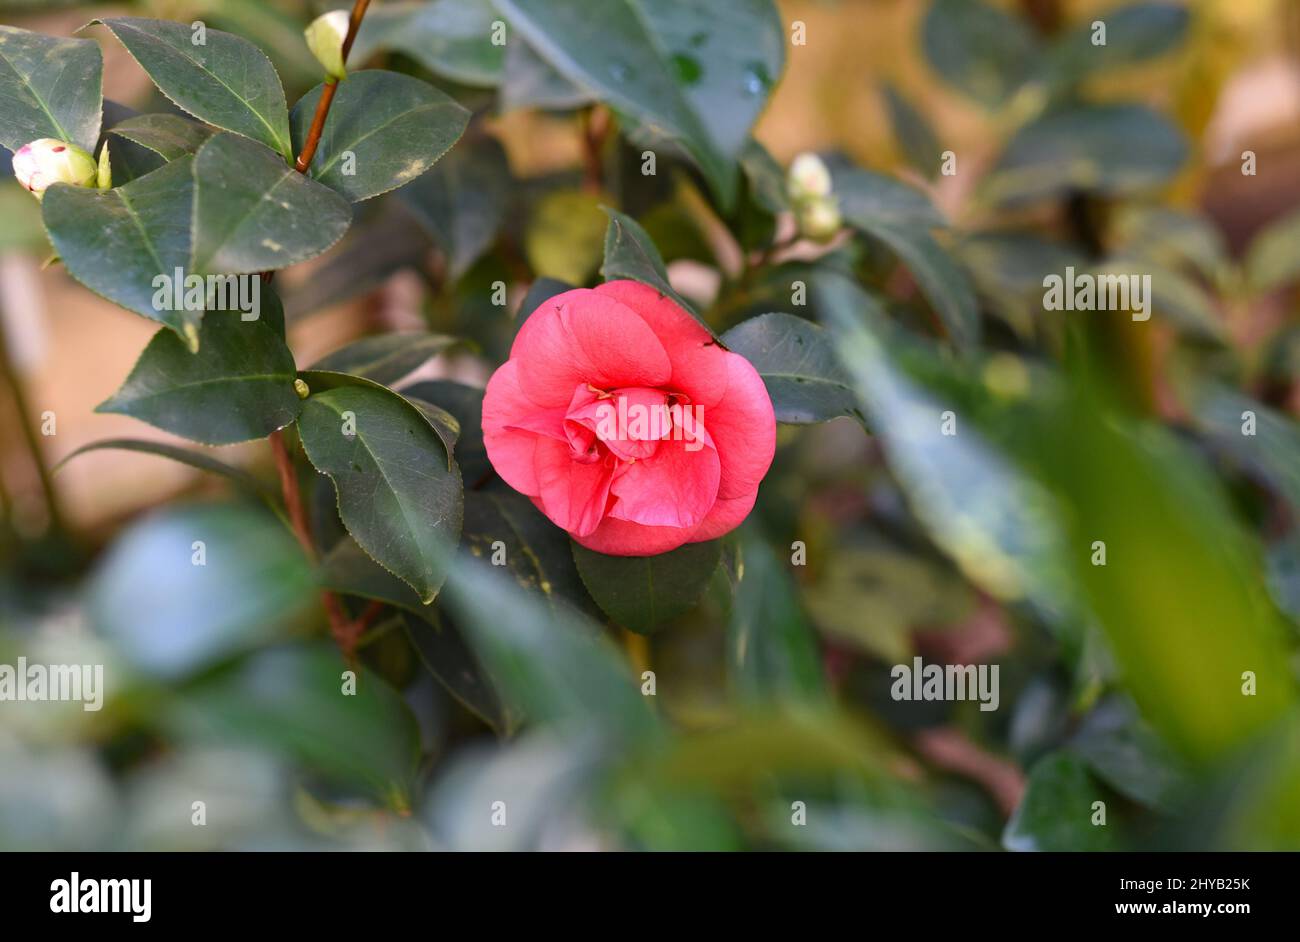 Camellia japonica (Japanese Camellia) flower close up Stock Photo